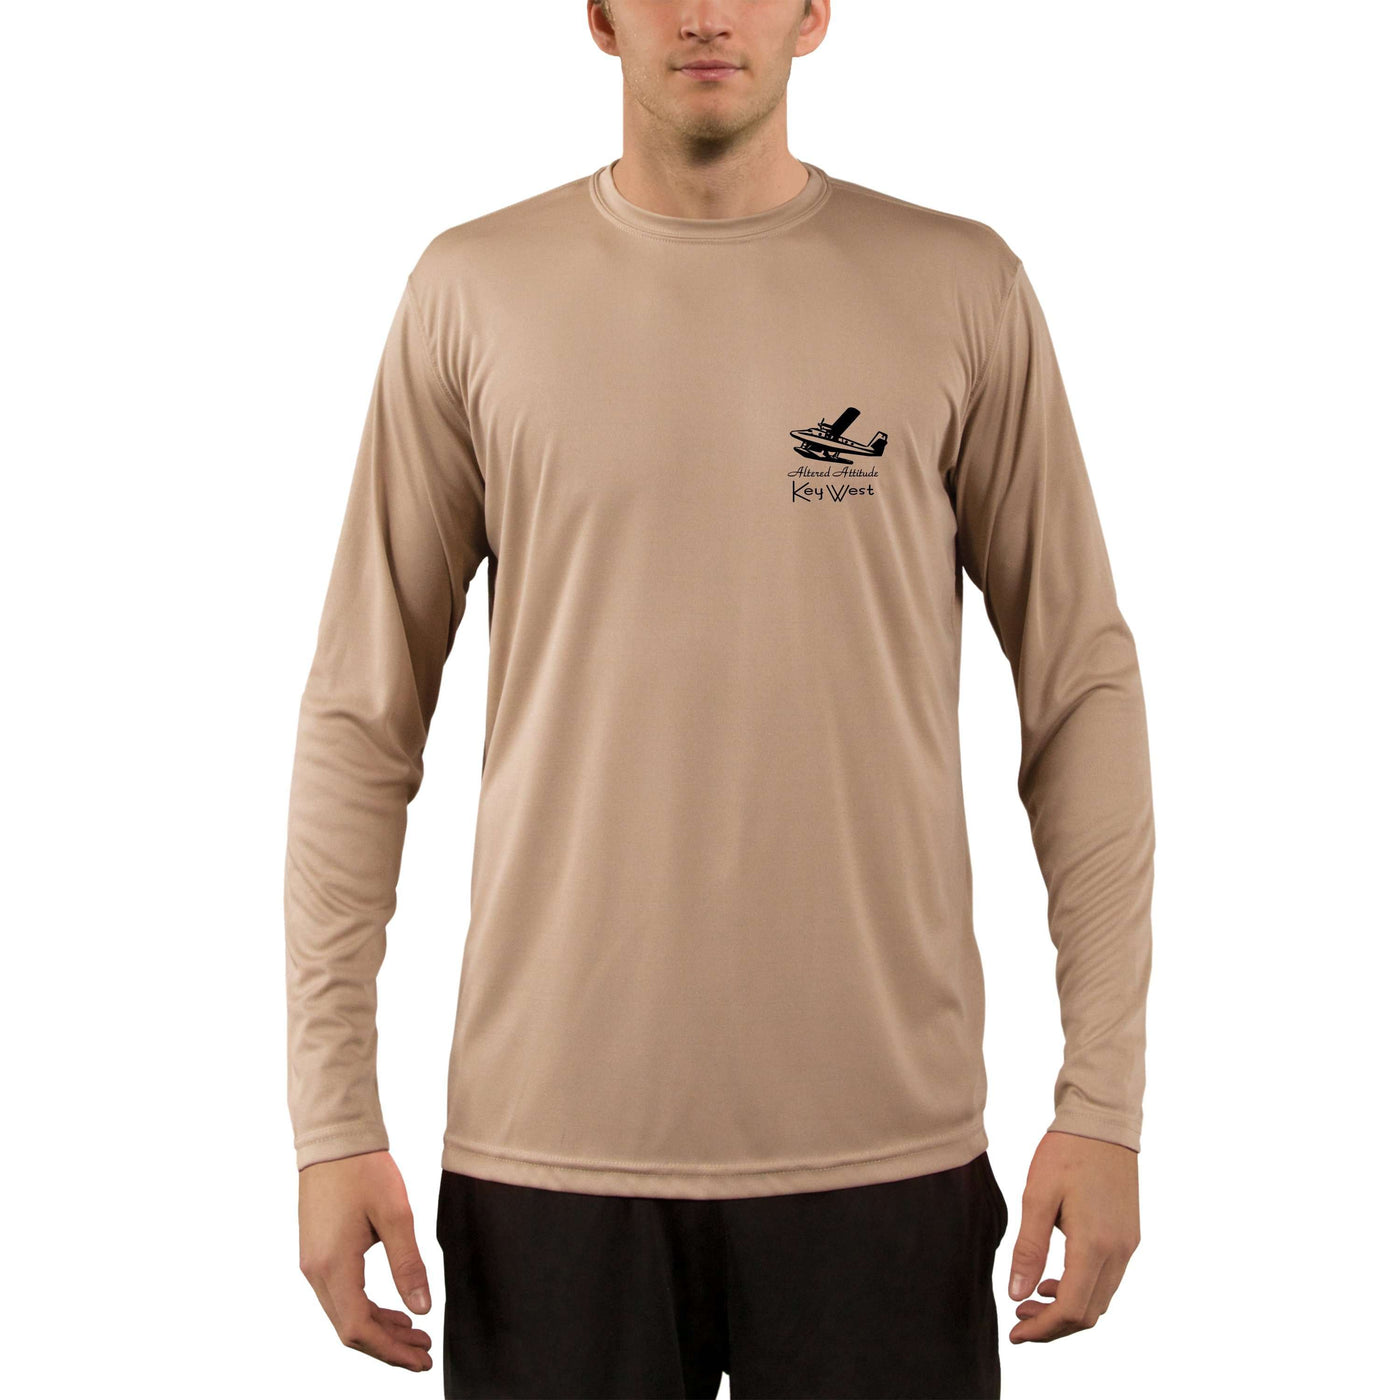 Vintage Destination Key West Men's UPF 50+ UV Sun Protection Long Sleeve T-Shirt